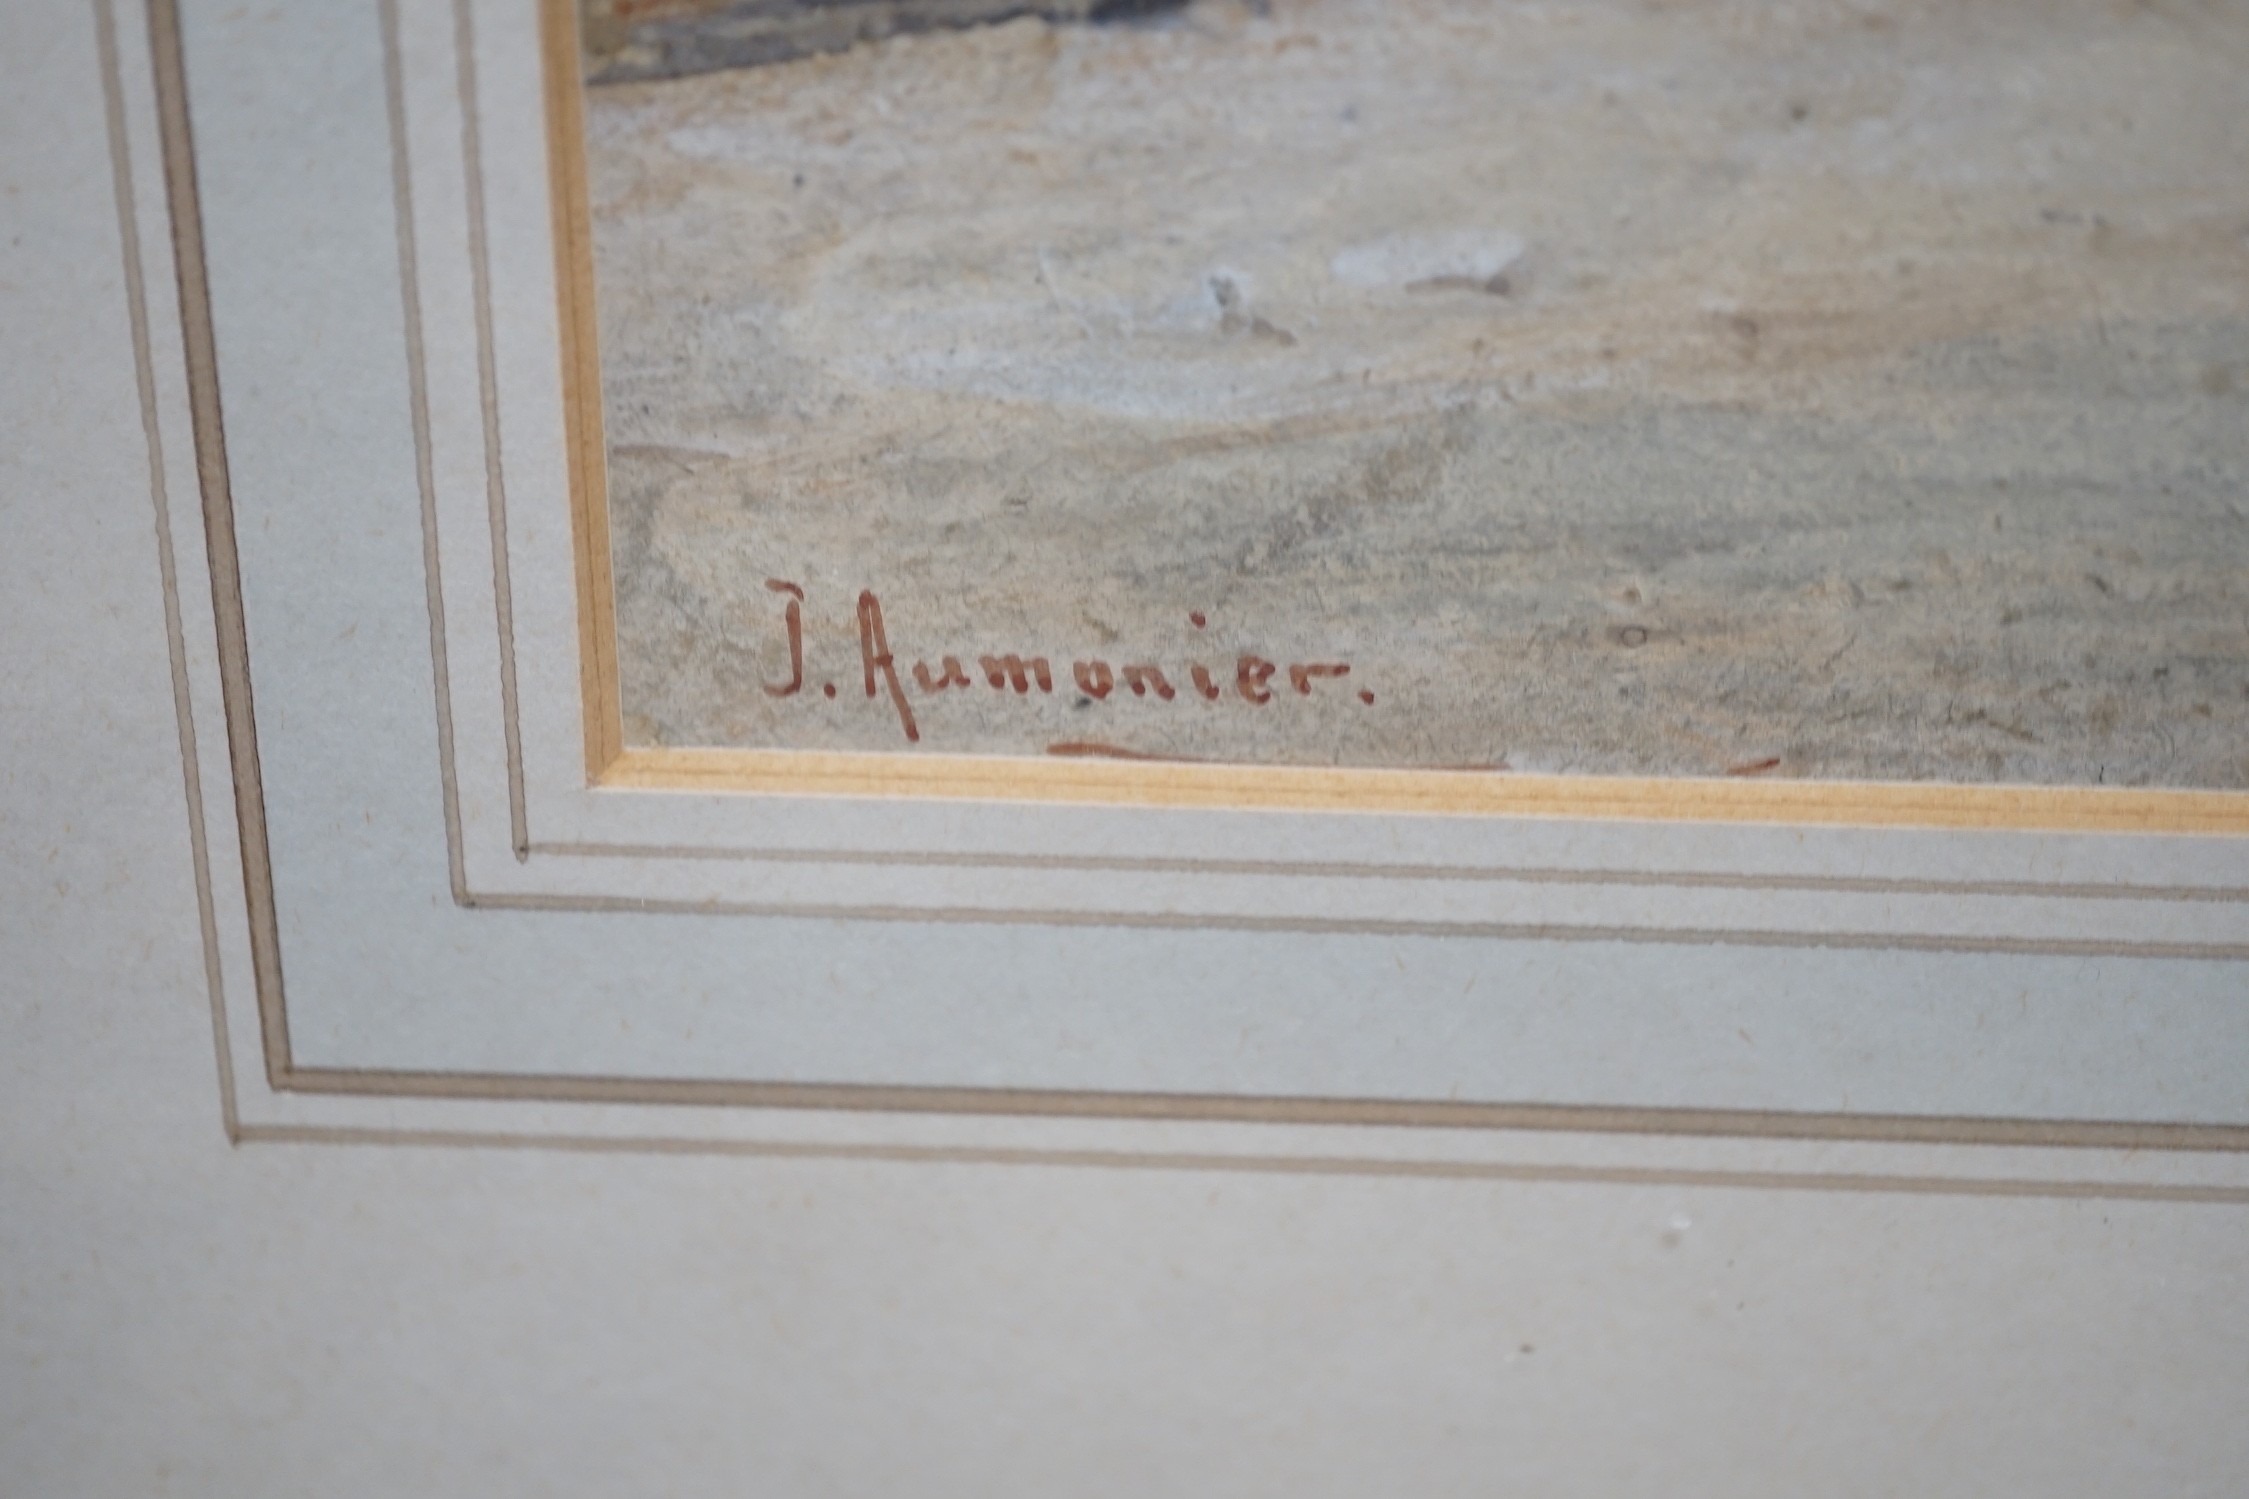 James Aumonier (1832-1911), watercolour, 'Overlooking Venice lagoon', signed, 15 x 19cm